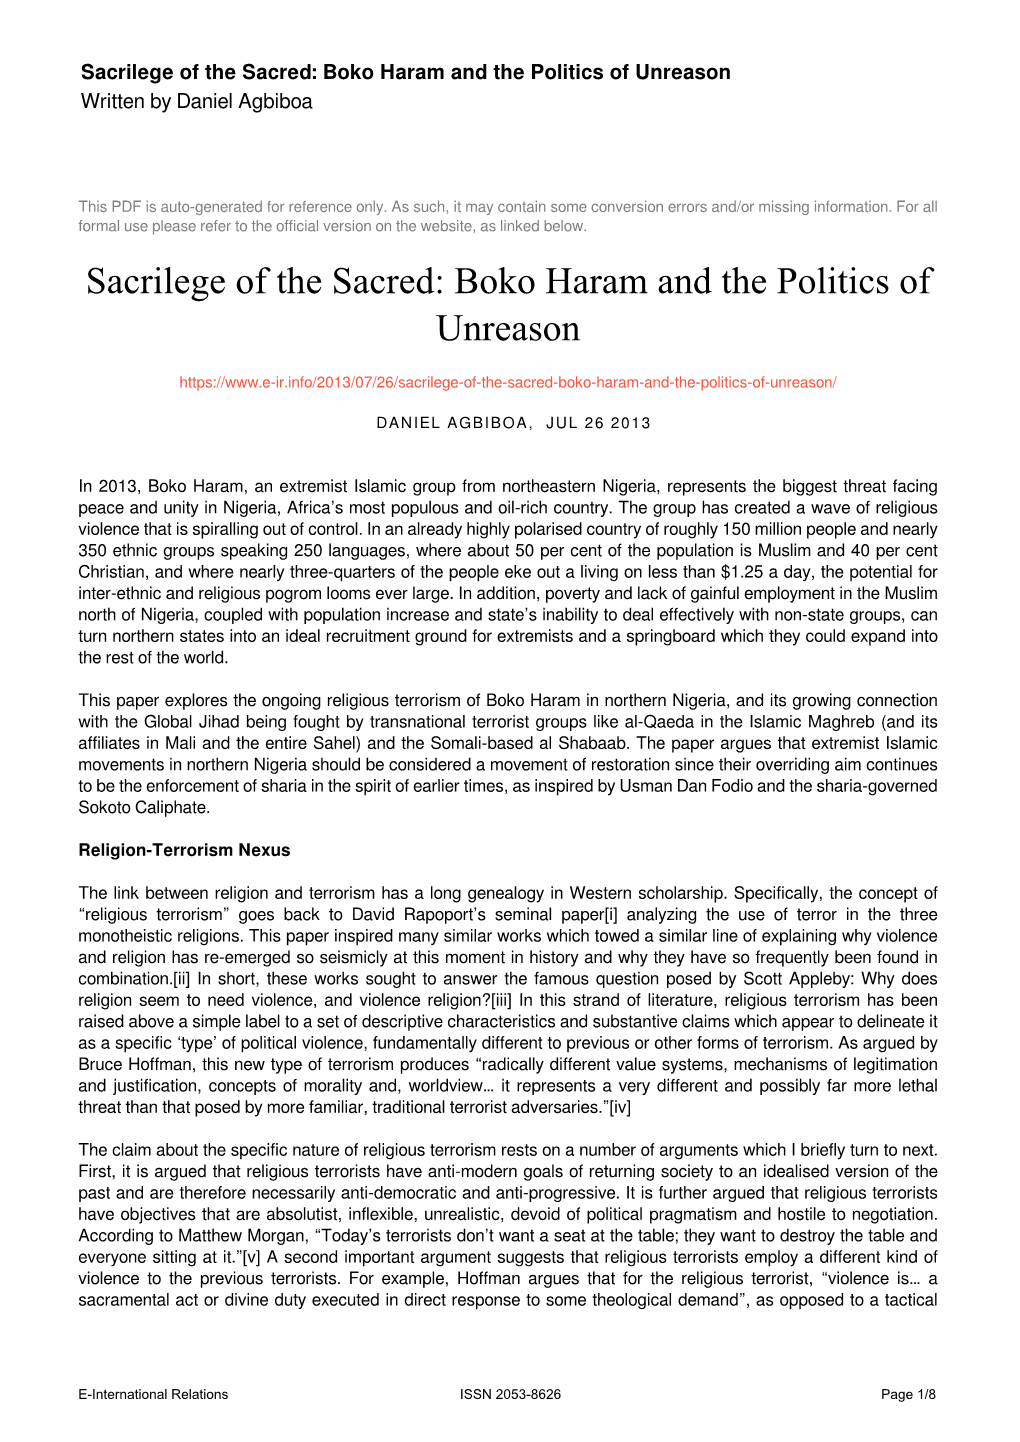 Sacrilege of the Sacred: Boko Haram and the Politics of Unreason Written by Daniel Agbiboa